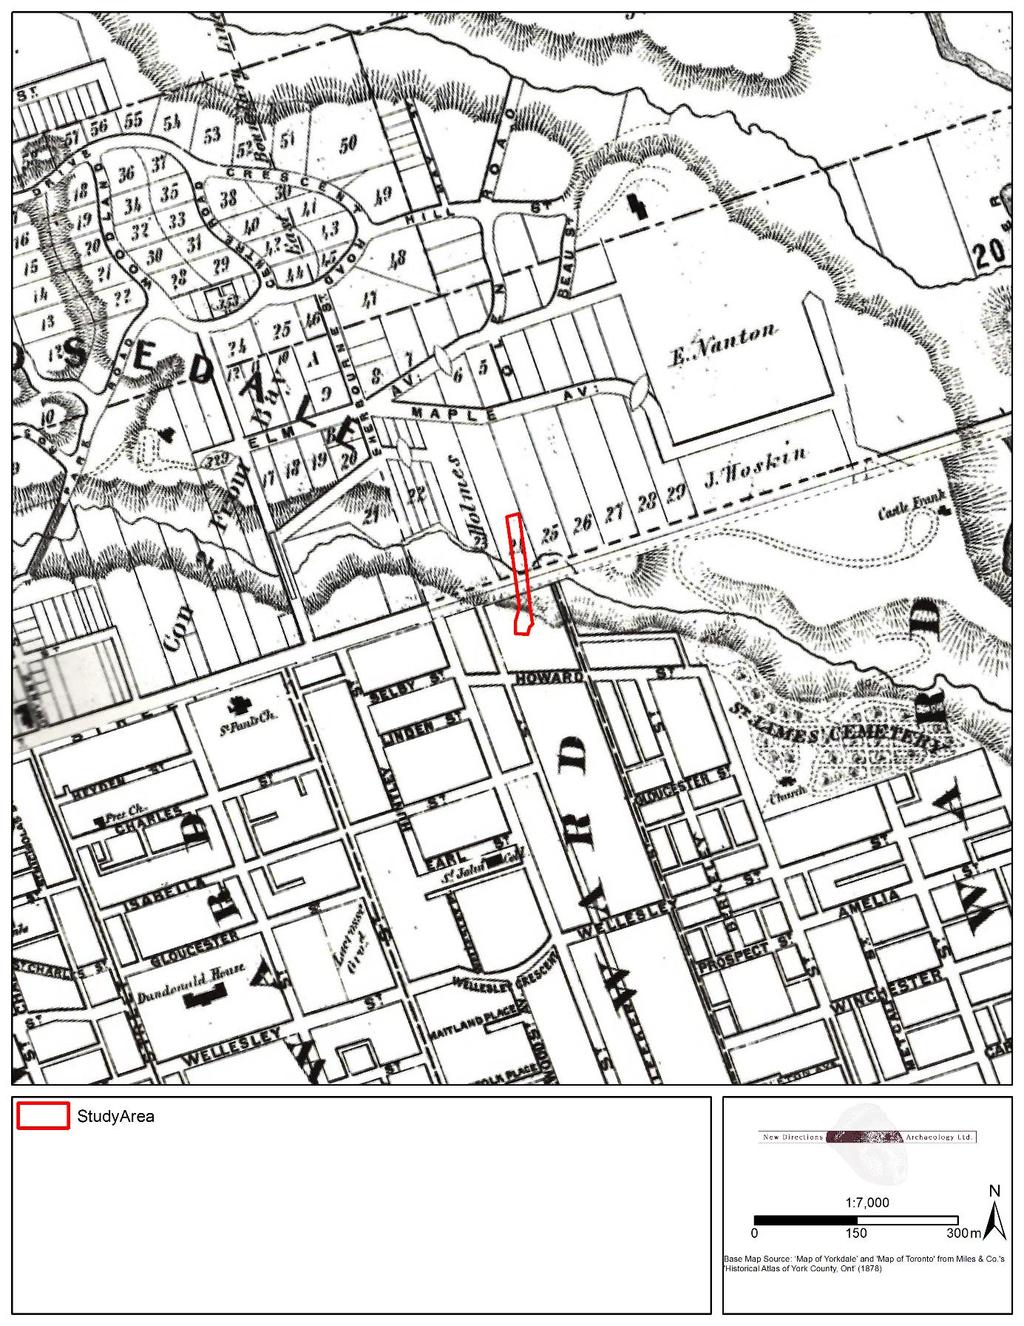 Stage 1-2 Archaeological Assessment of Glen Road Pedestrian Bridge EA Study 25